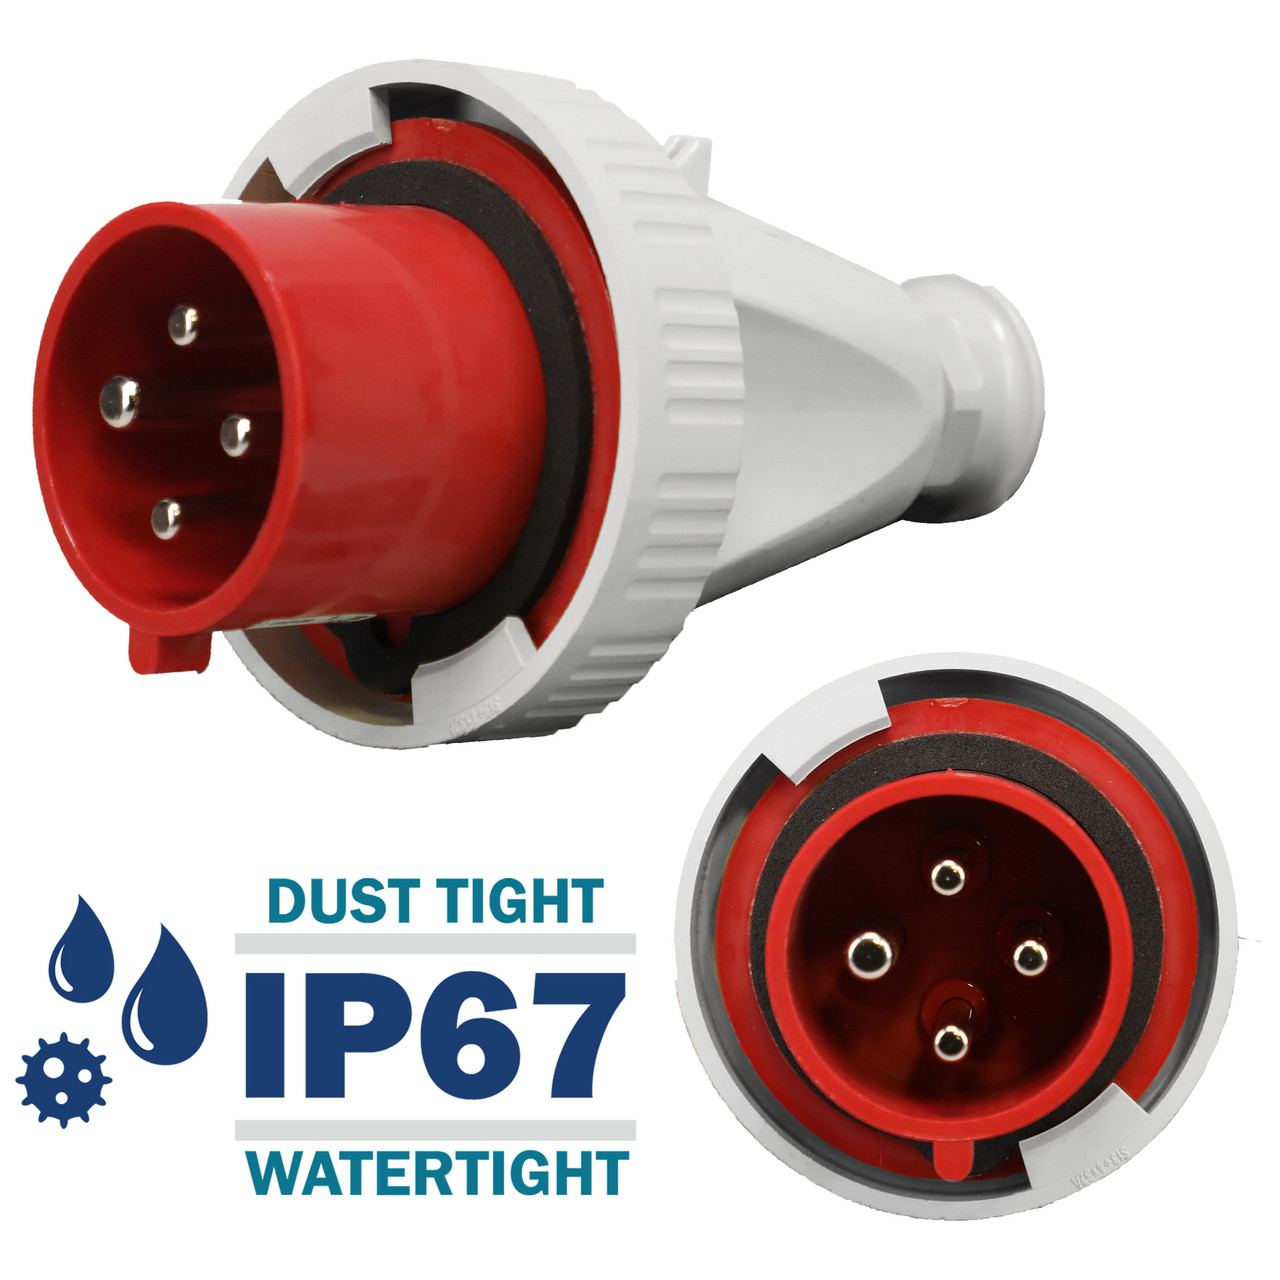 239403 Plug carries an environmental rating of IP67 Watertight